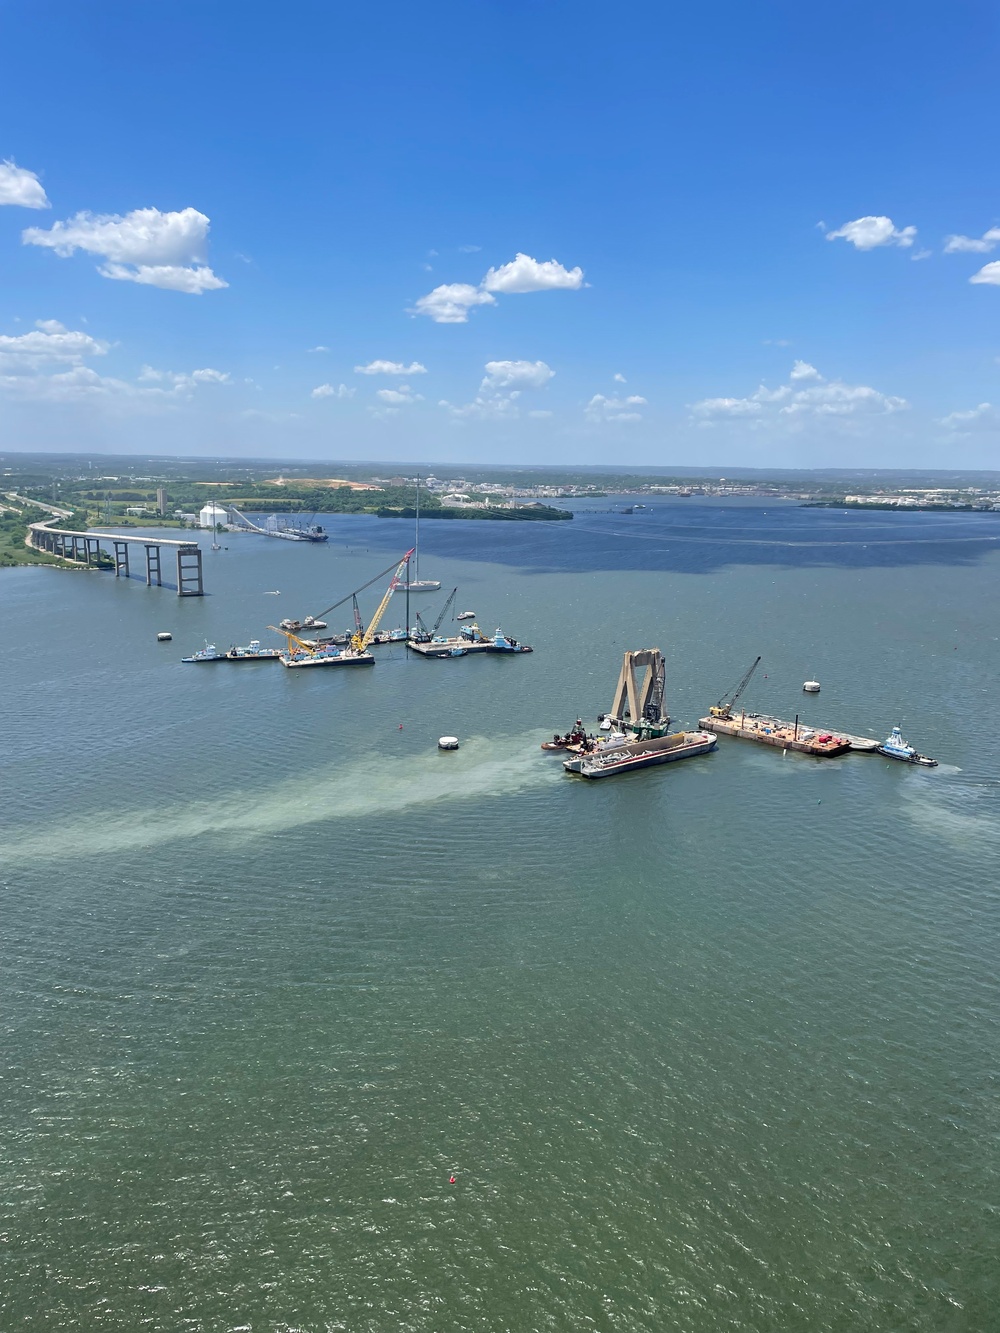 New aerial footage reveals progress of Baltimore bridge wreckage removal